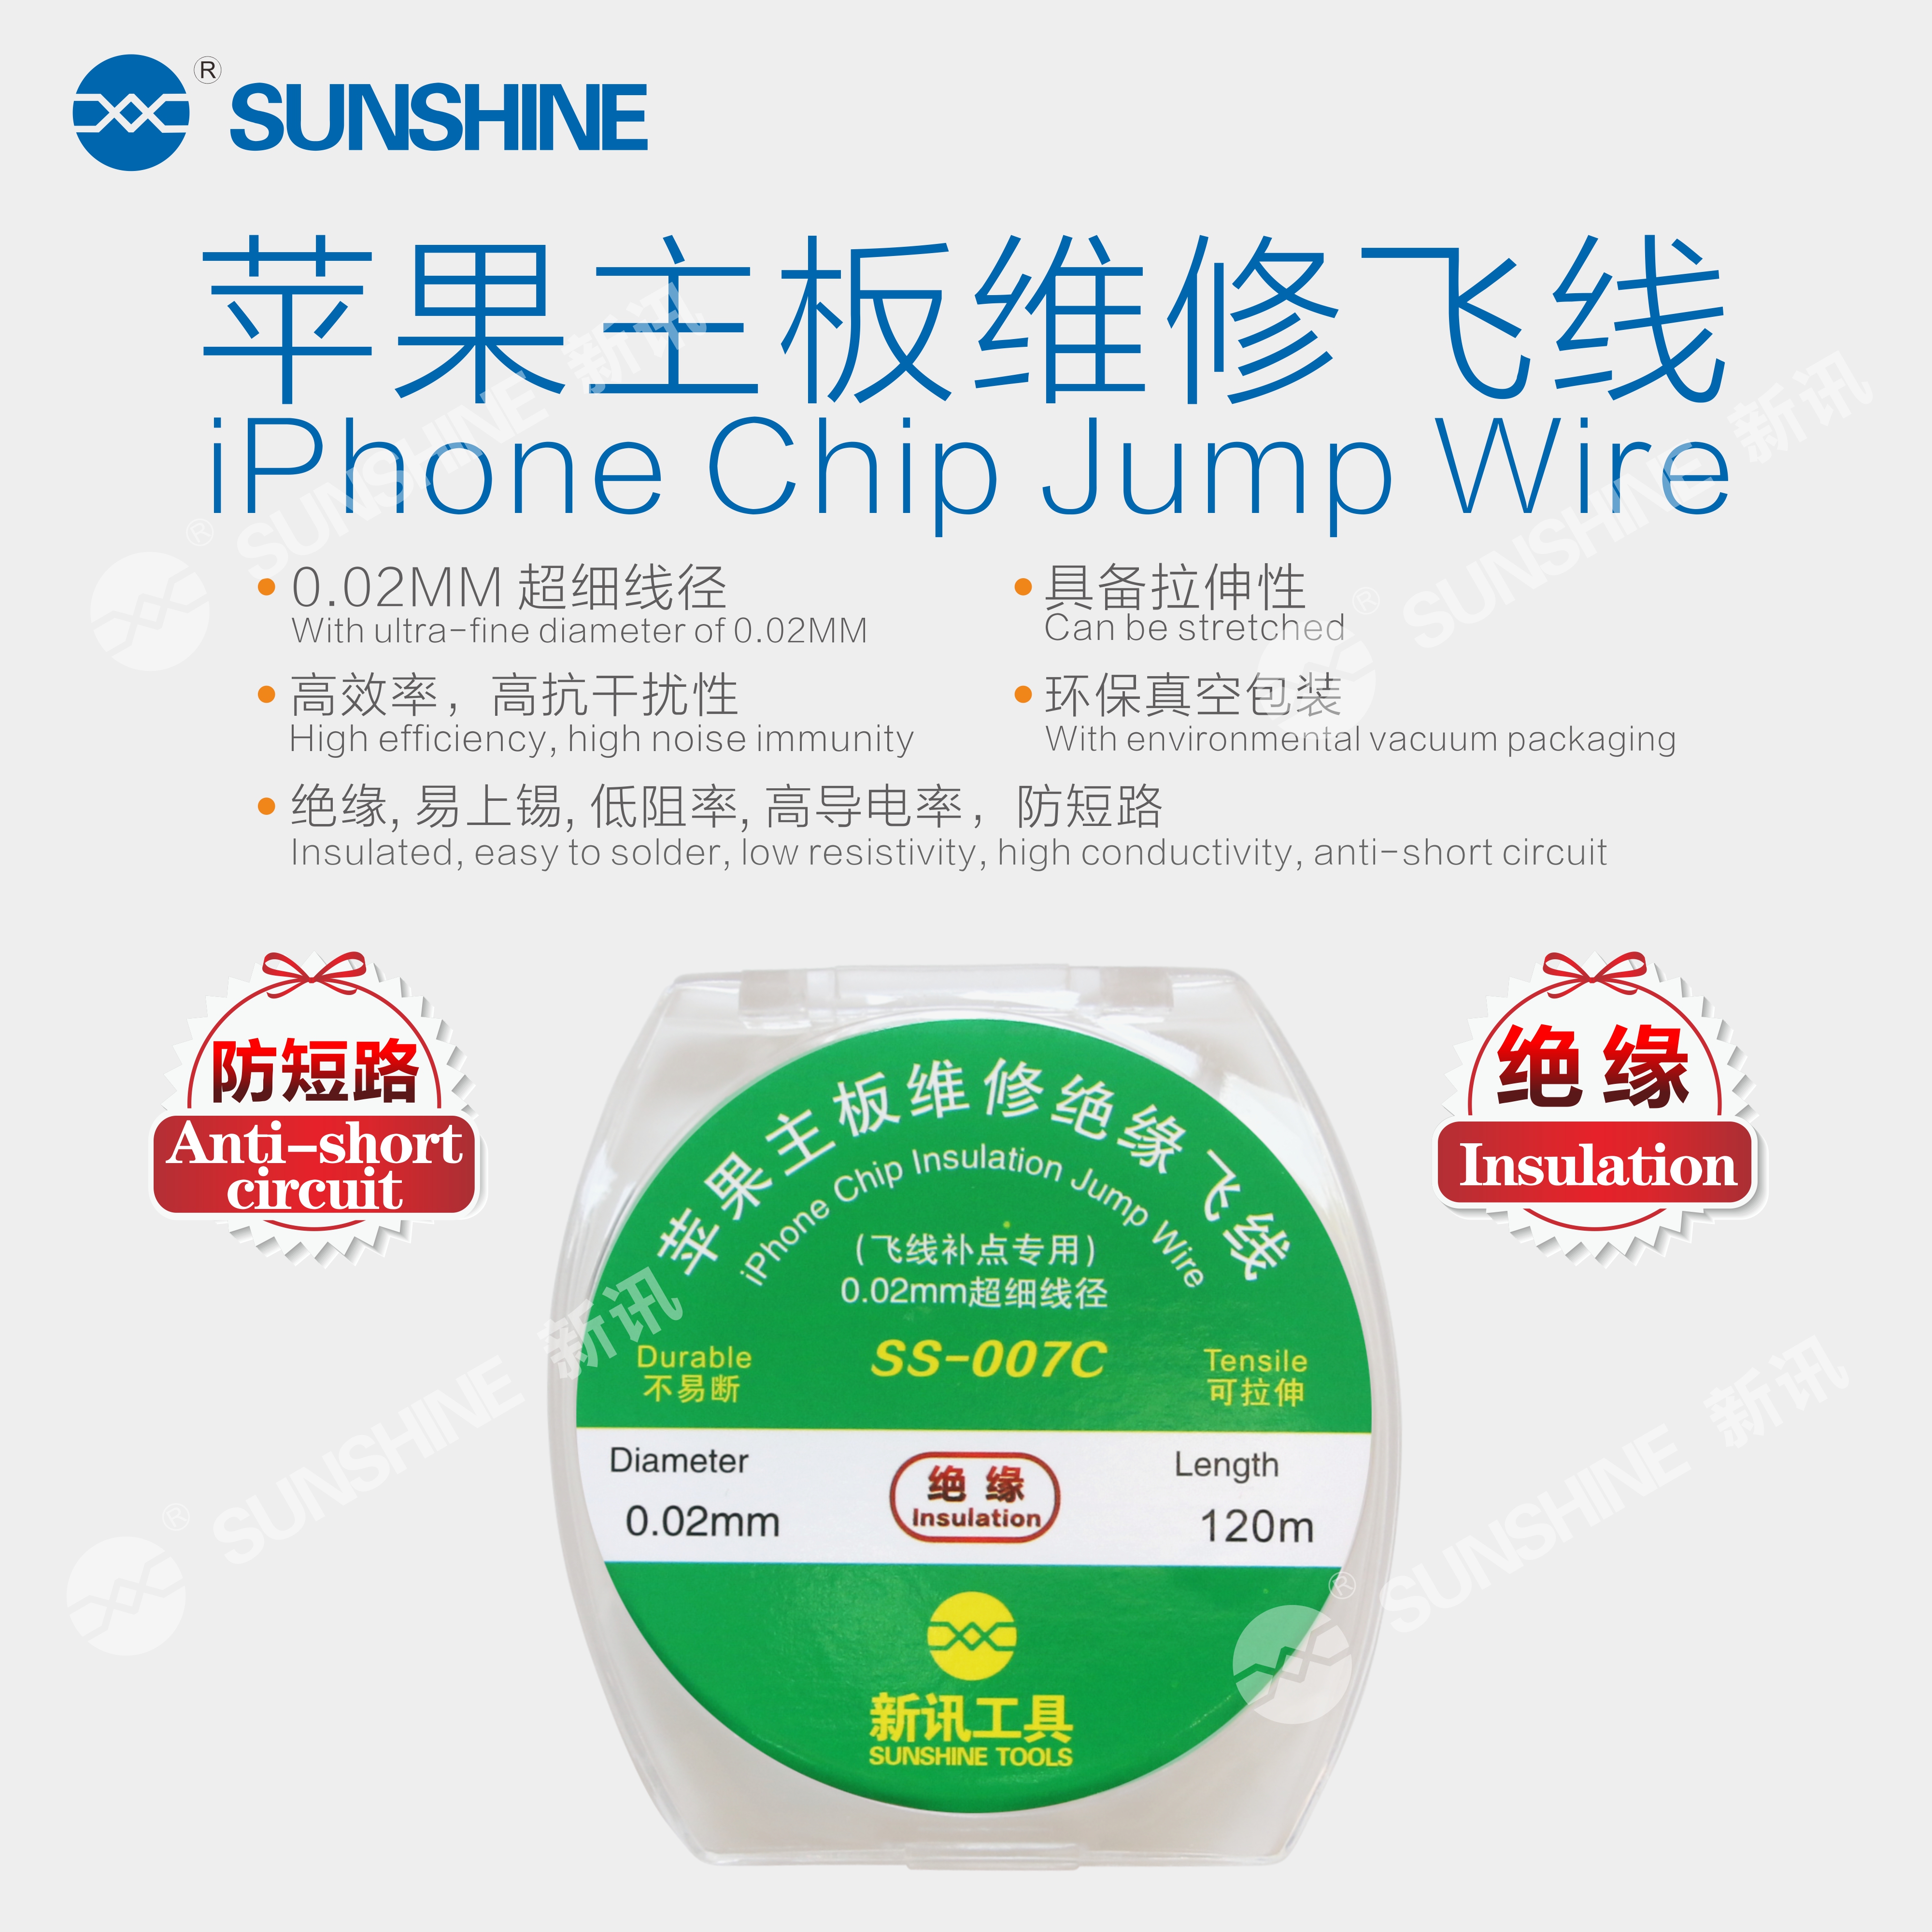 SUNSHINE SS-007C Iphone Pcb Insulated Repair Jump Wire/120M/0.02MM sunshine SS-007C Iphone Pcb Insulated Repair Jump Wire/120M/0.02MM